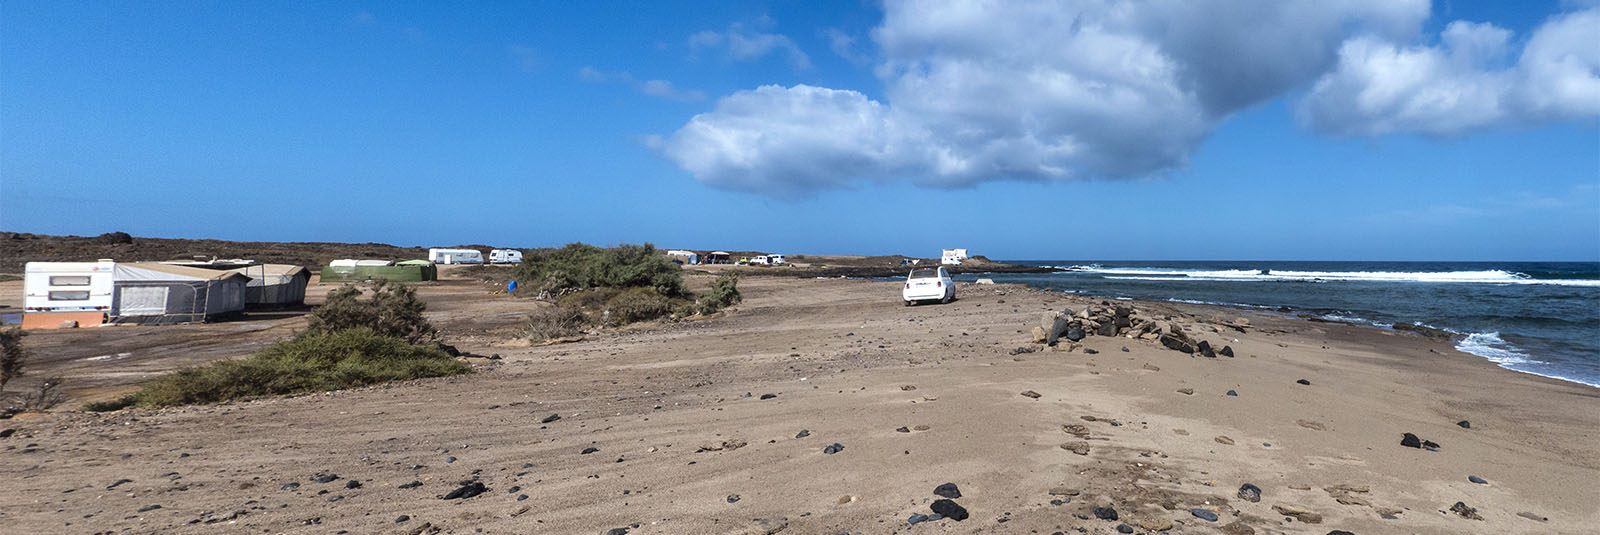 Die Strände Fuerteventuras: Playa del Jablito